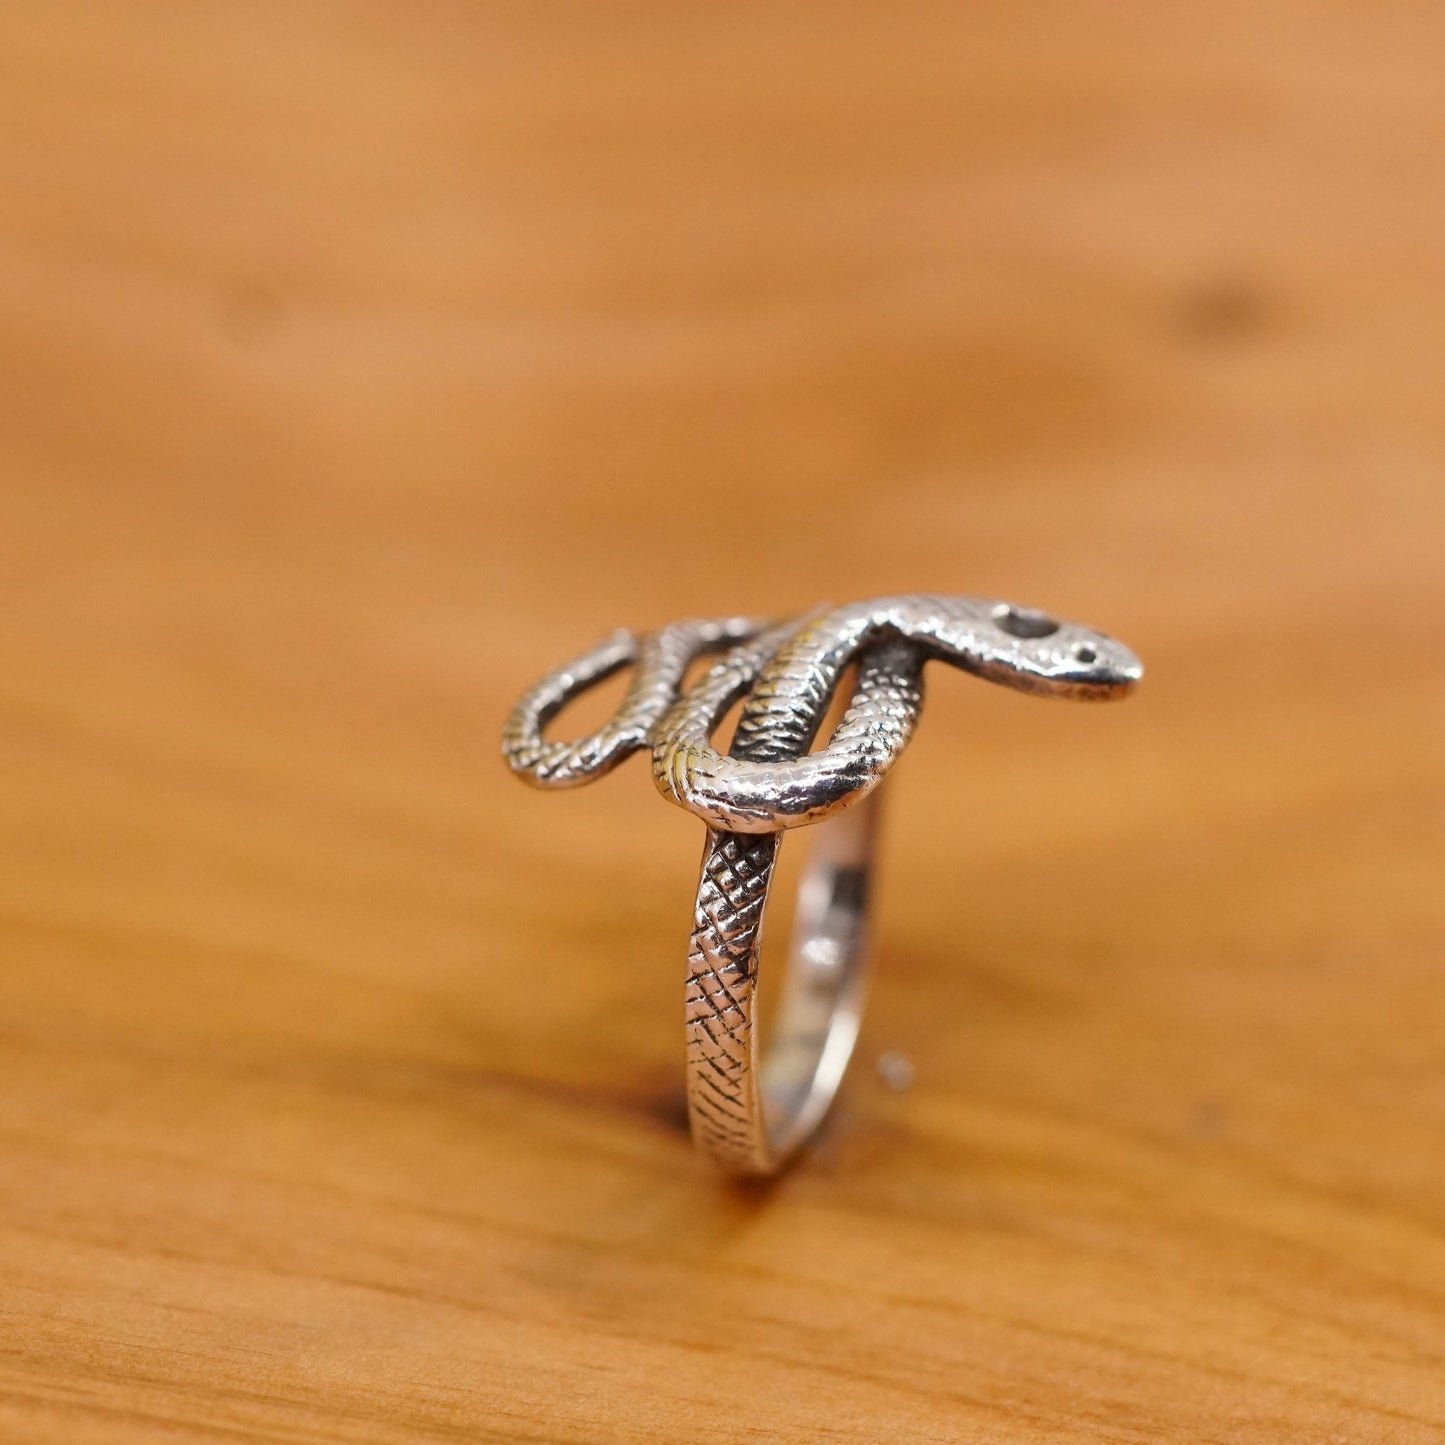 Size 5, vintage Sterling silver handmade ring, 925 snake band